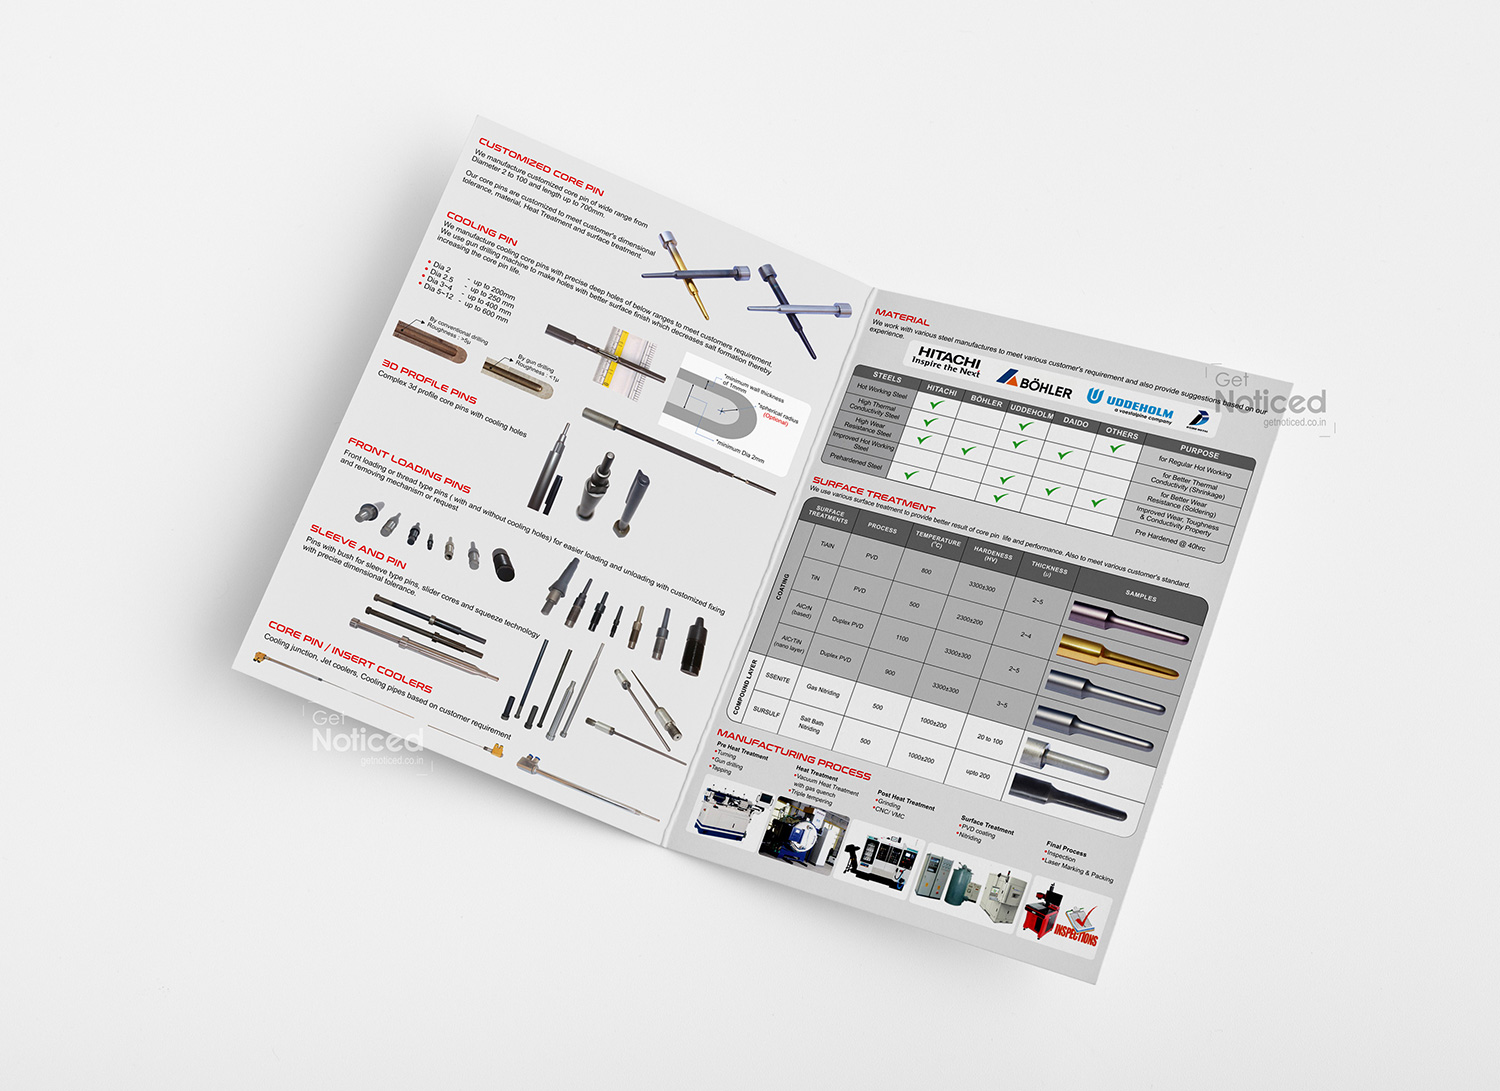 Sse product Catalogue Design